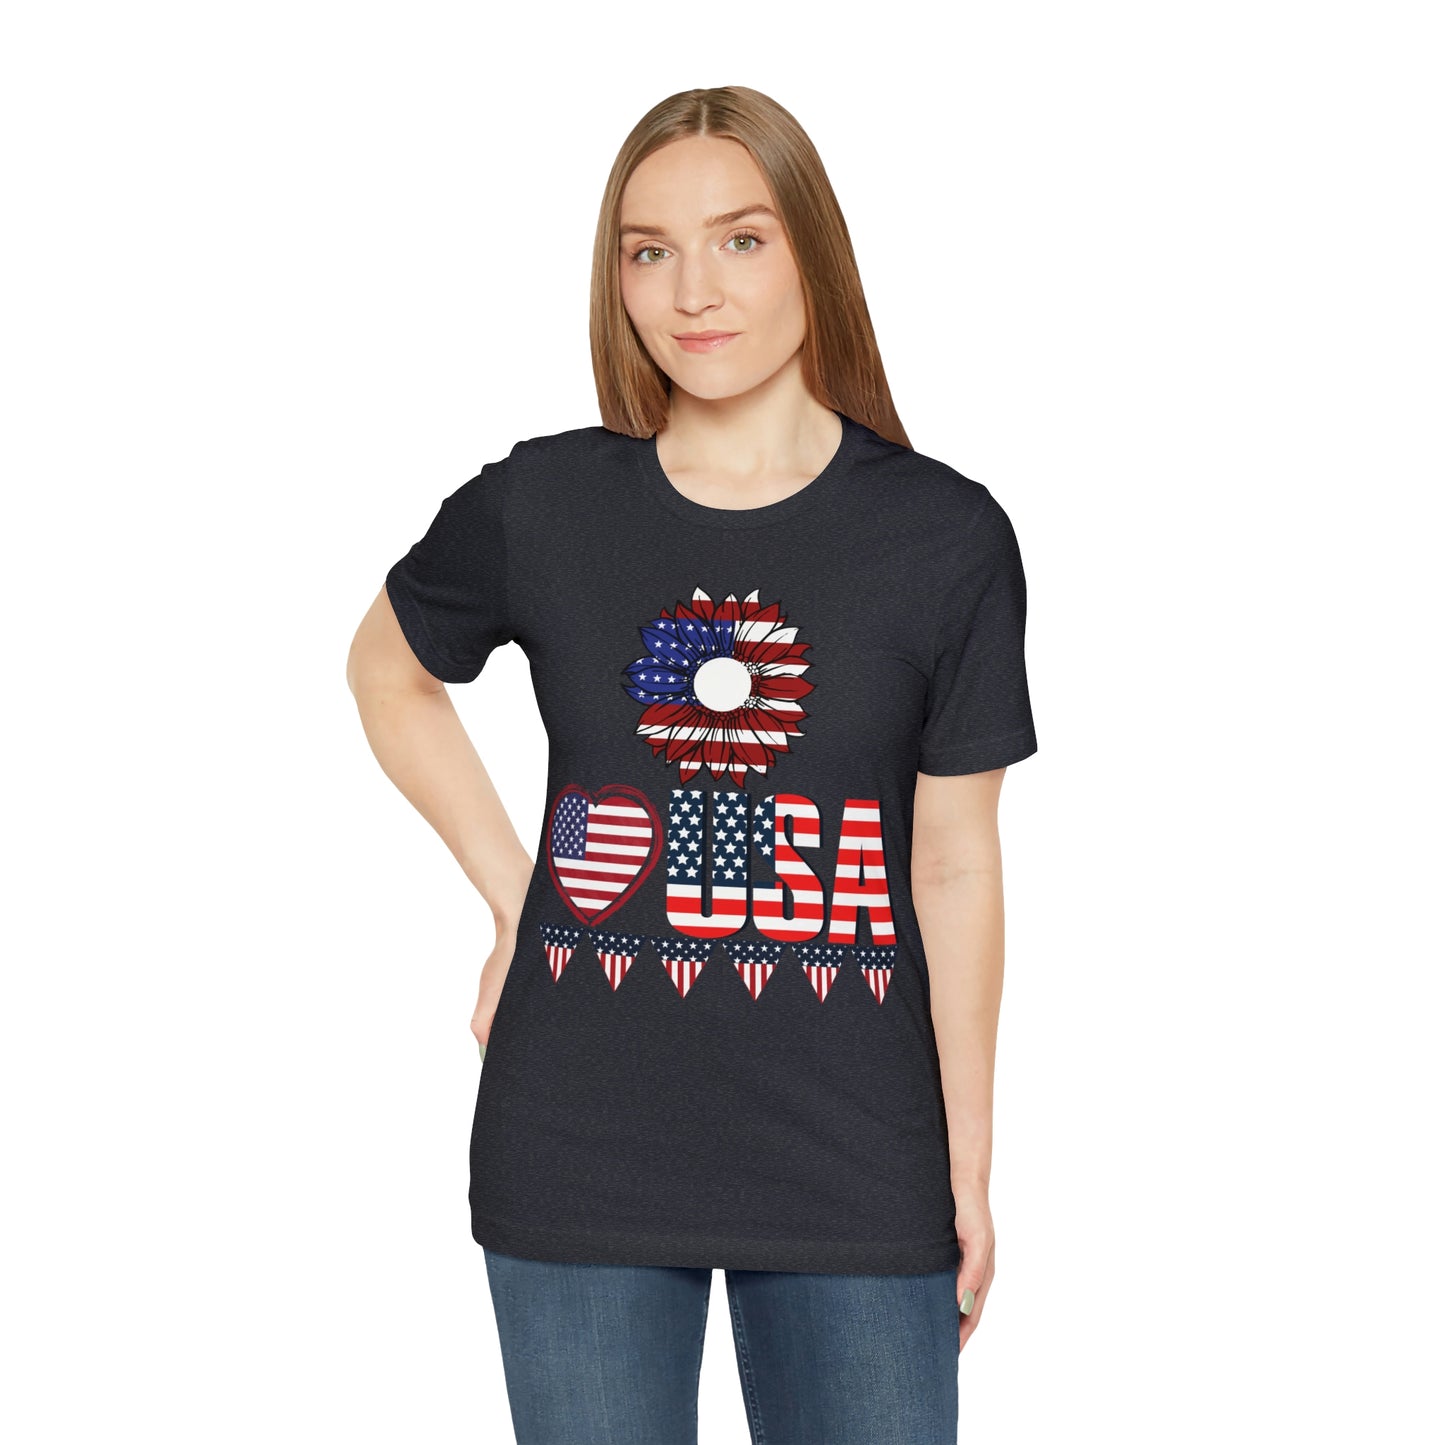 American flag shirt, Red, white, and blue shirt, Flower Love USA shirt,